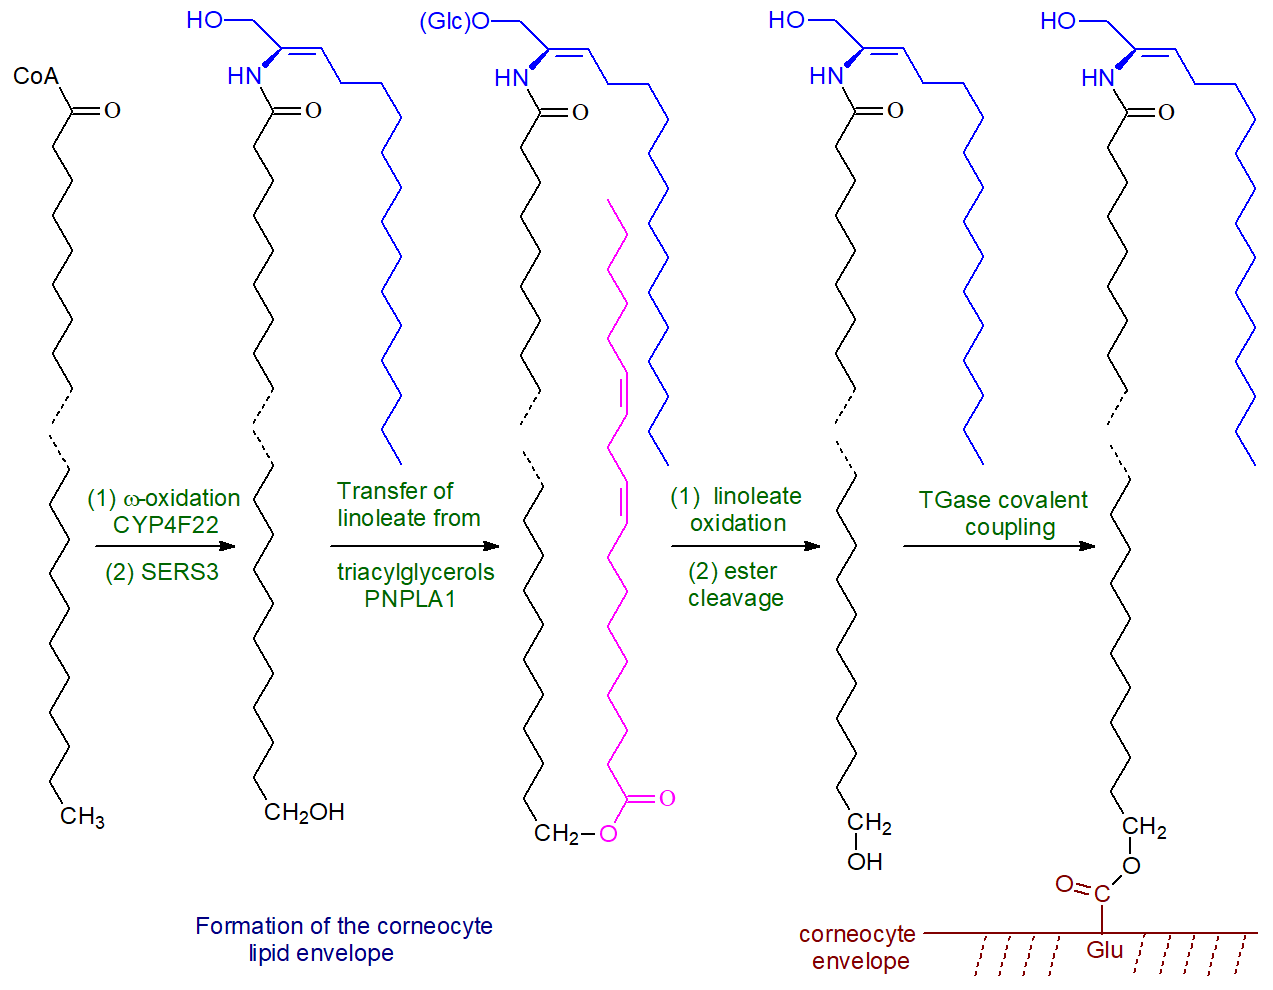 Formation of the corneocyte lipid envelope